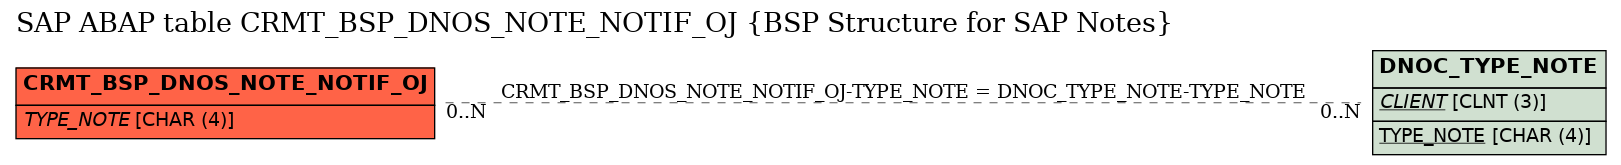 E-R Diagram for table CRMT_BSP_DNOS_NOTE_NOTIF_OJ (BSP Structure for SAP Notes)